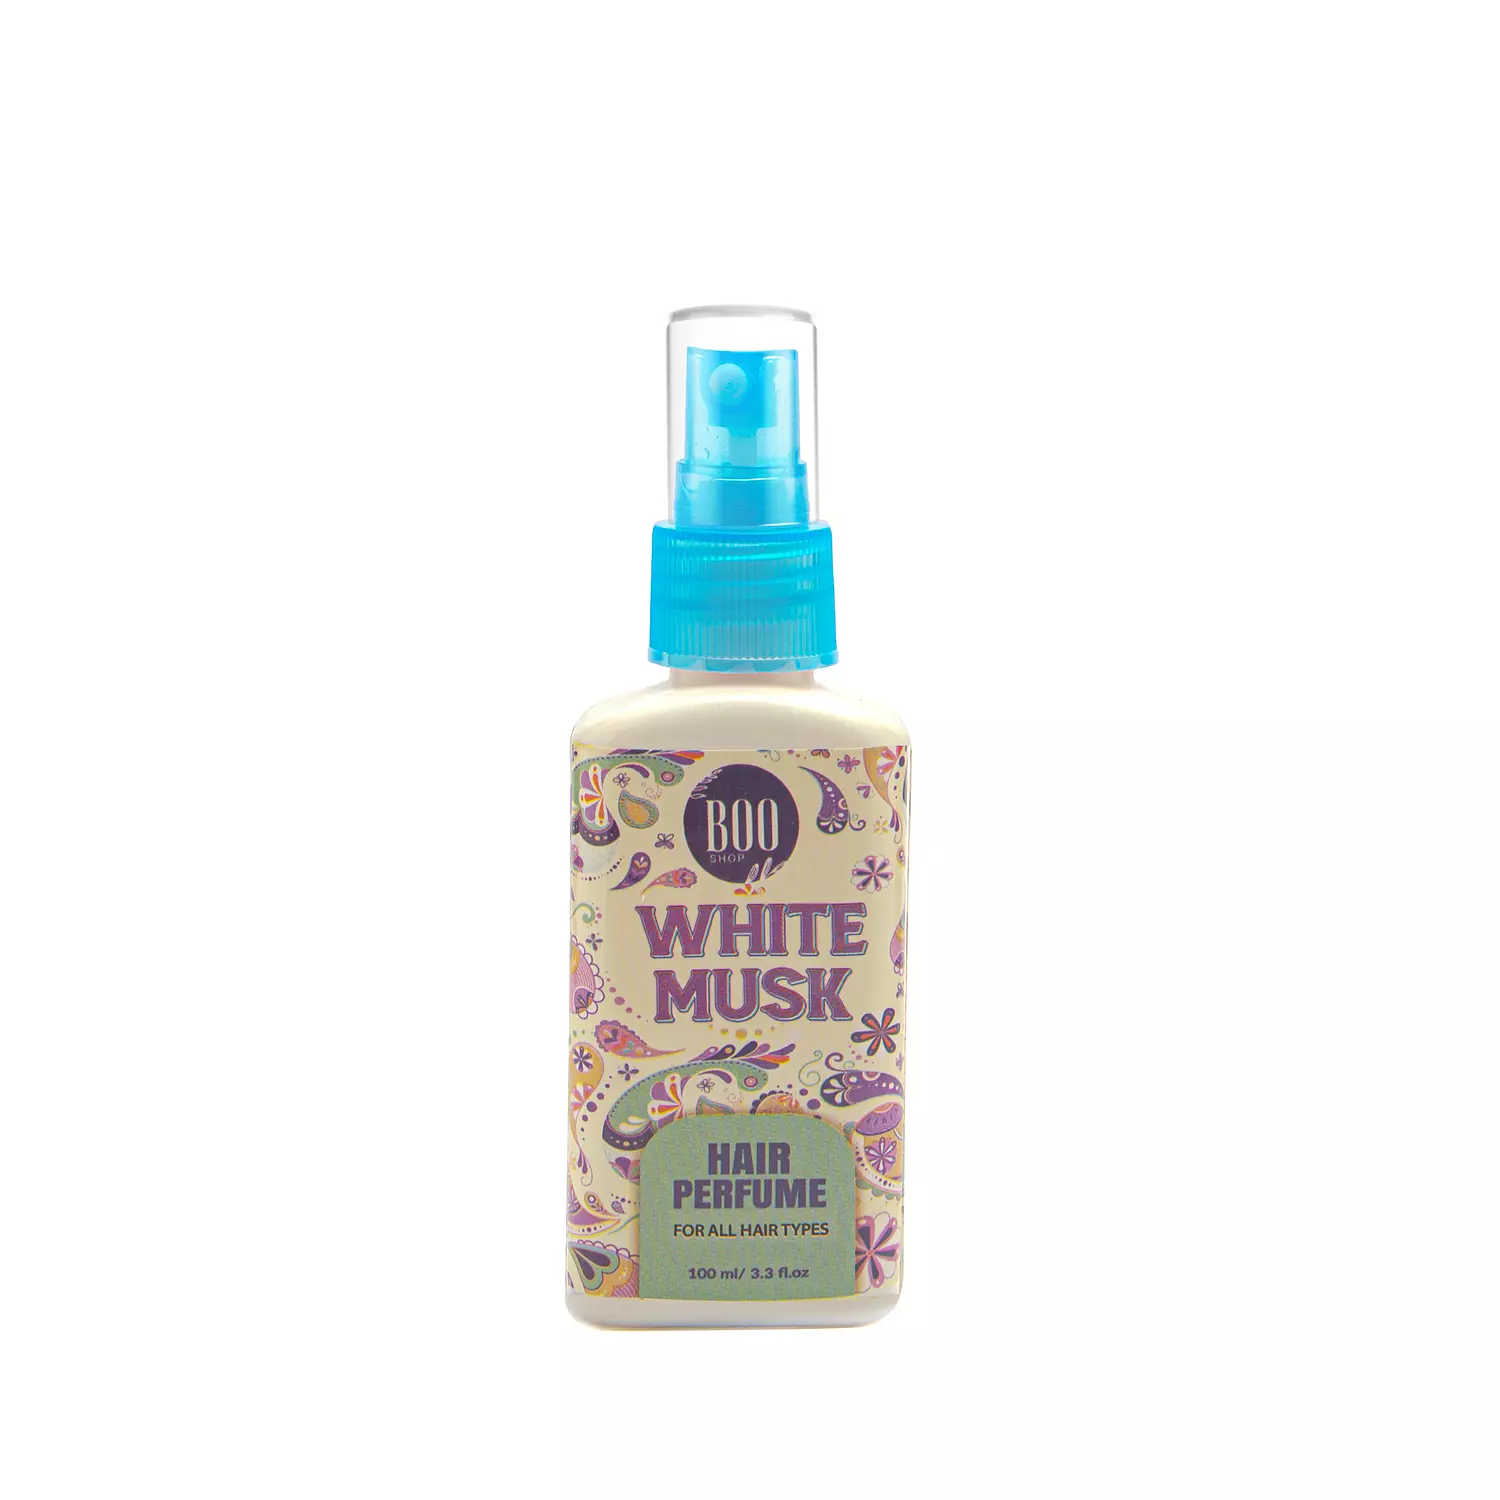 Hair perfume mist - White Musk scent 100ML hover image